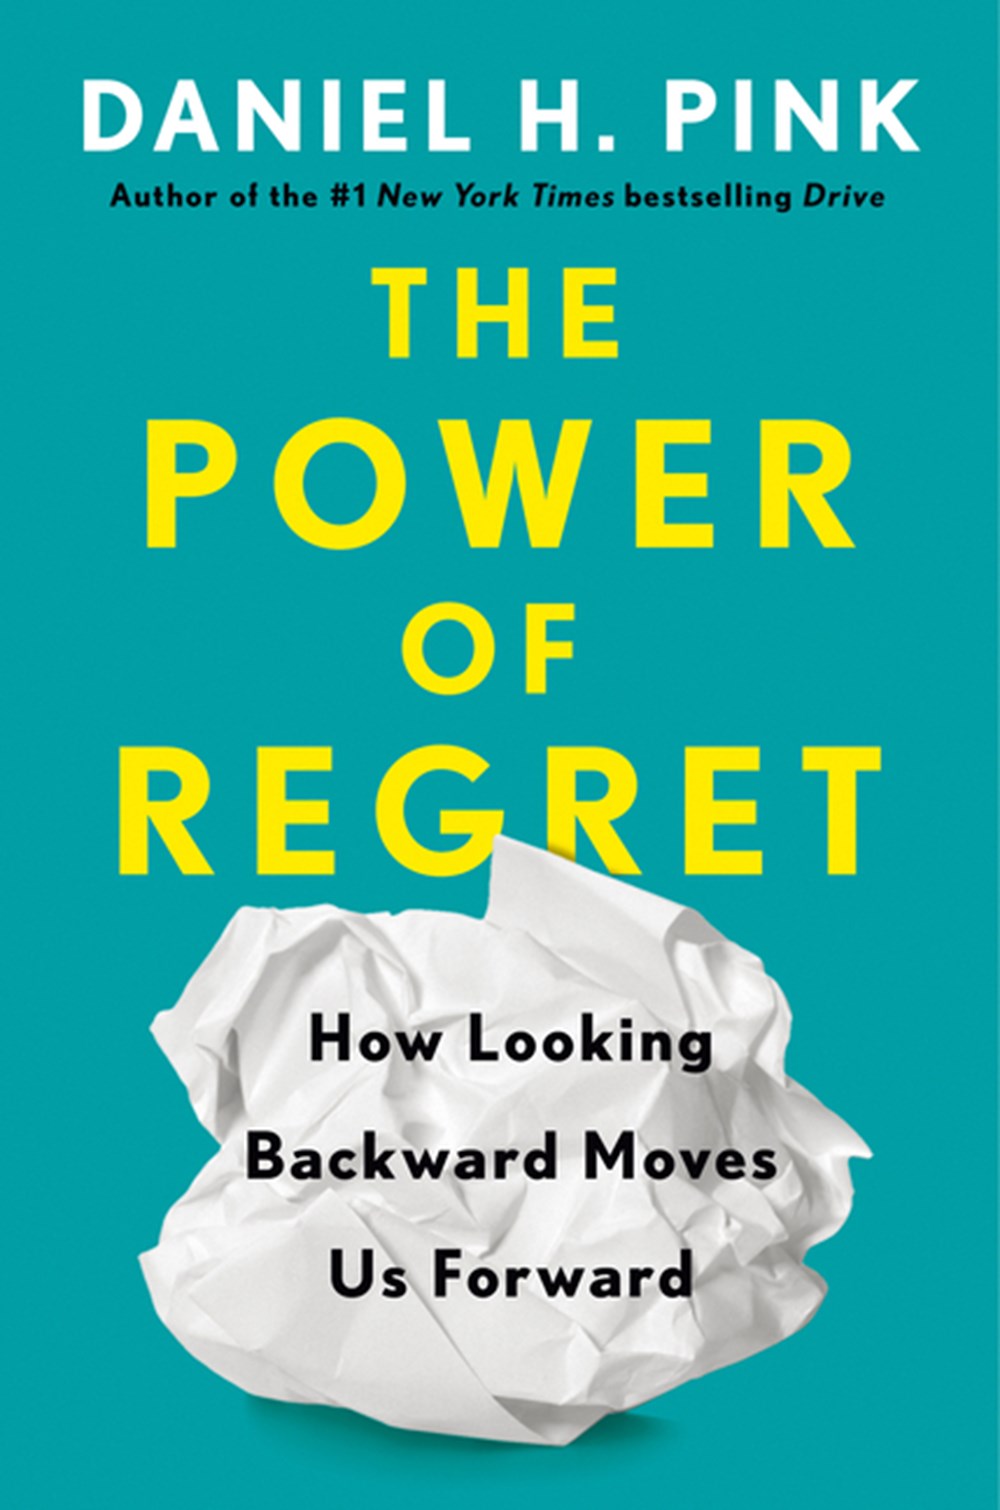 Power of Regret: How Looking Backward Moves Us Forward